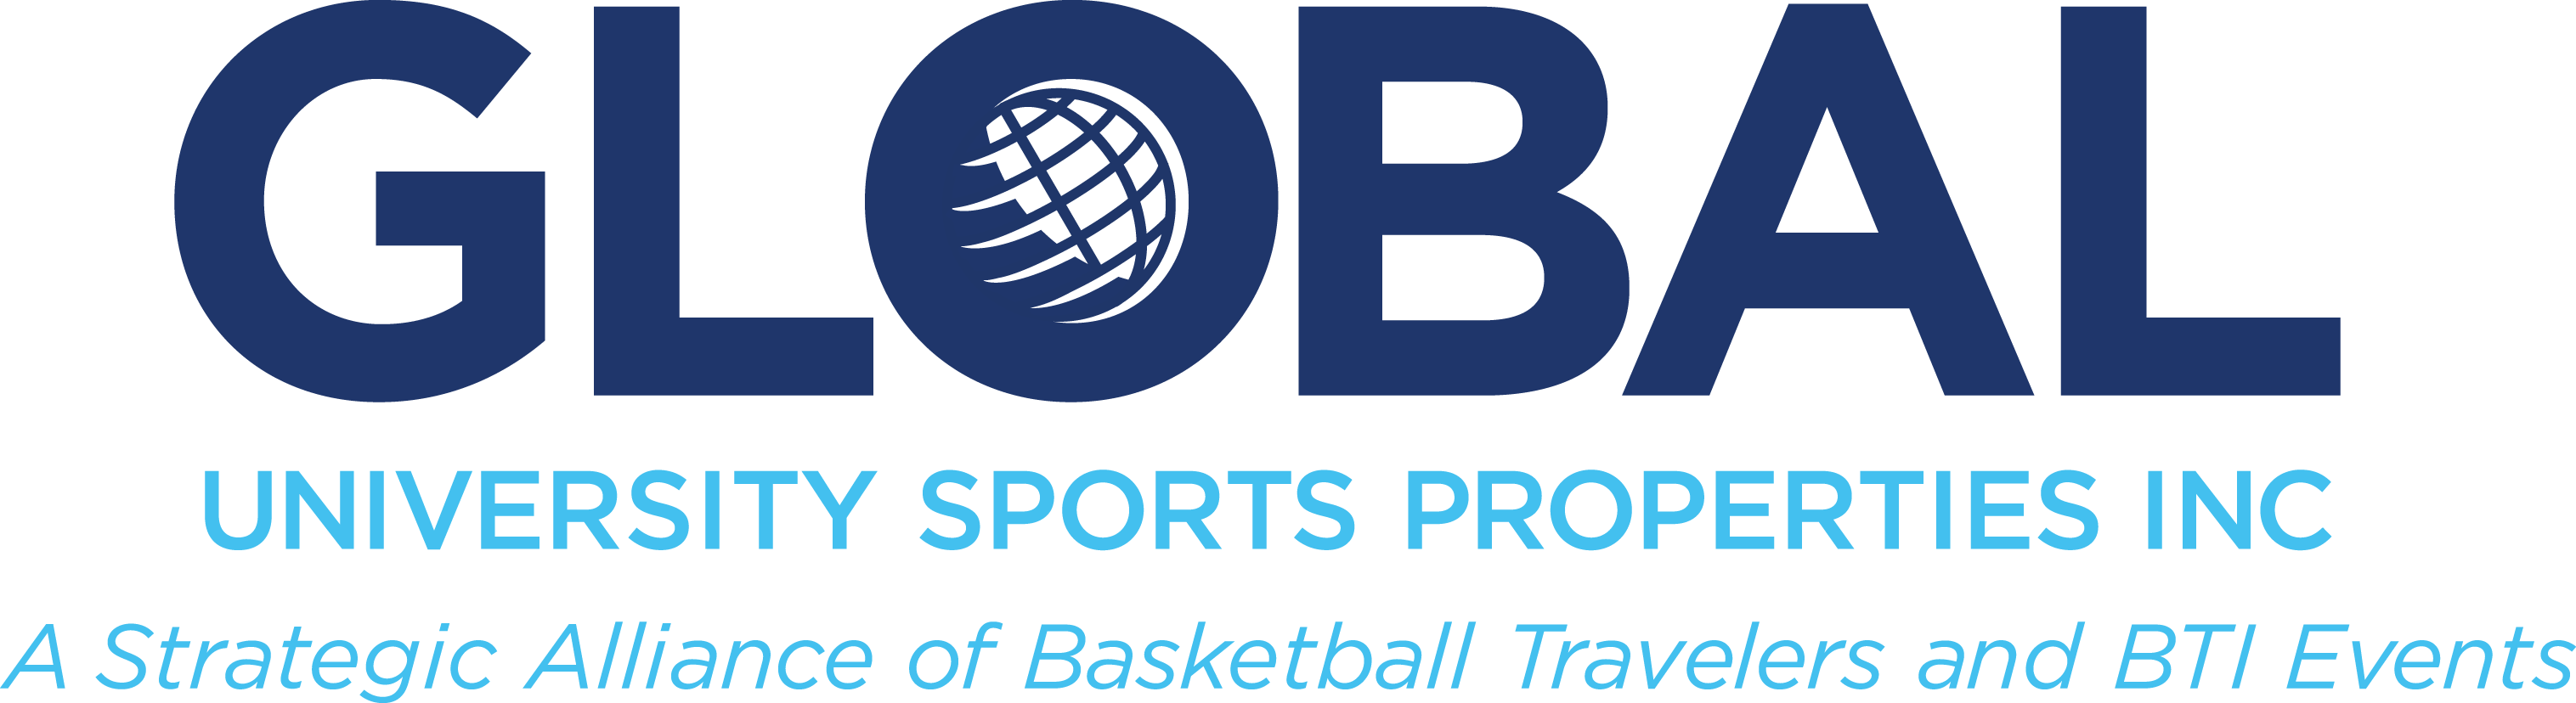 Global University Sports Properties Logo PNG image